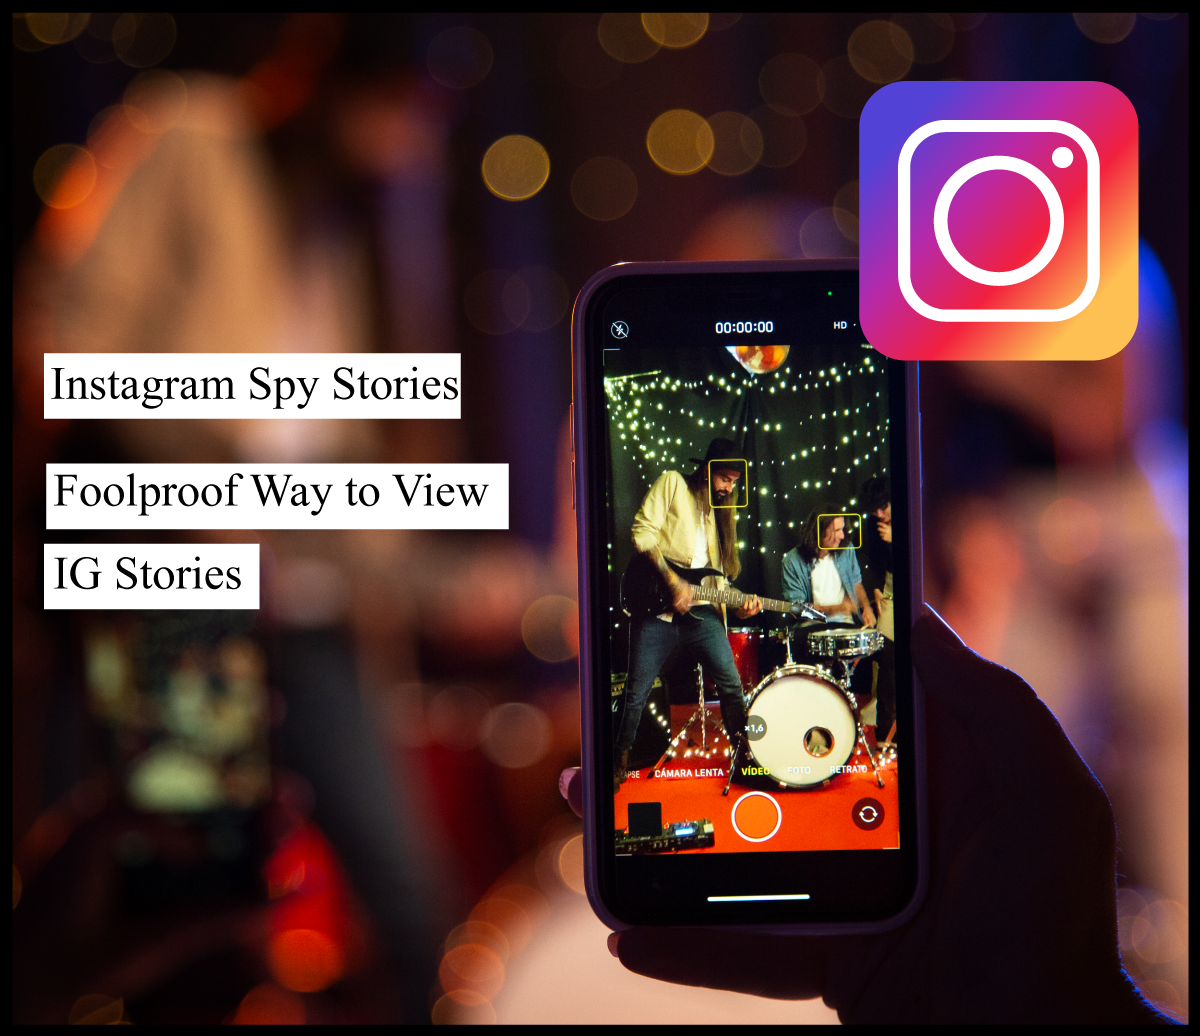 Instagram Spy Stories: Foolproof Way to View IG Stories